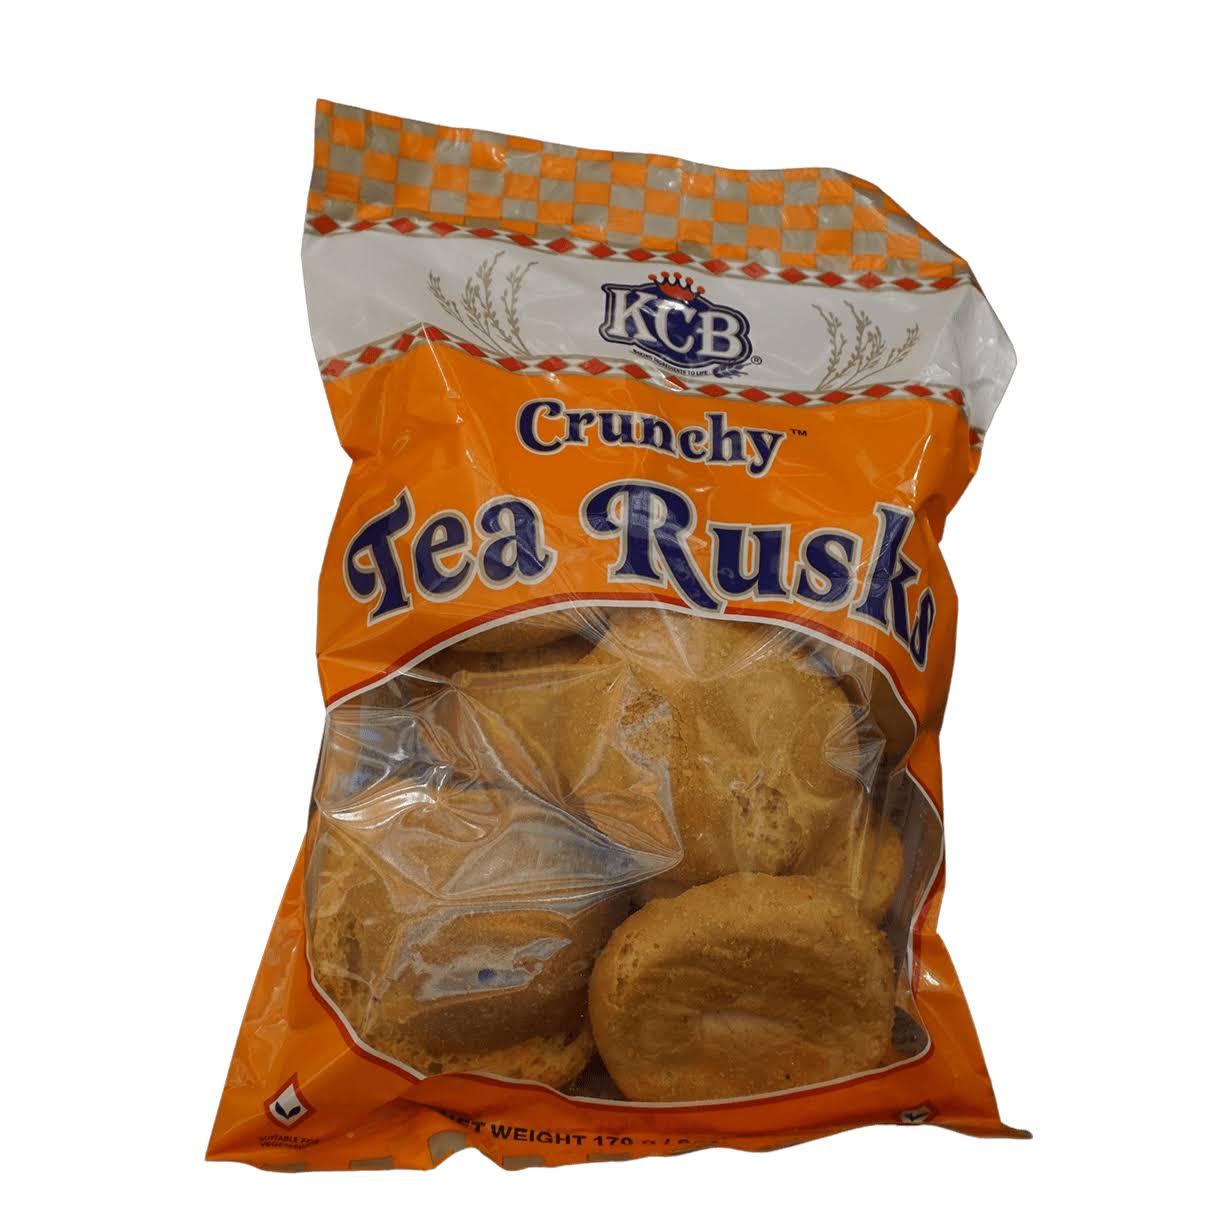 KCB Crunchy Tea Rusk, 170g